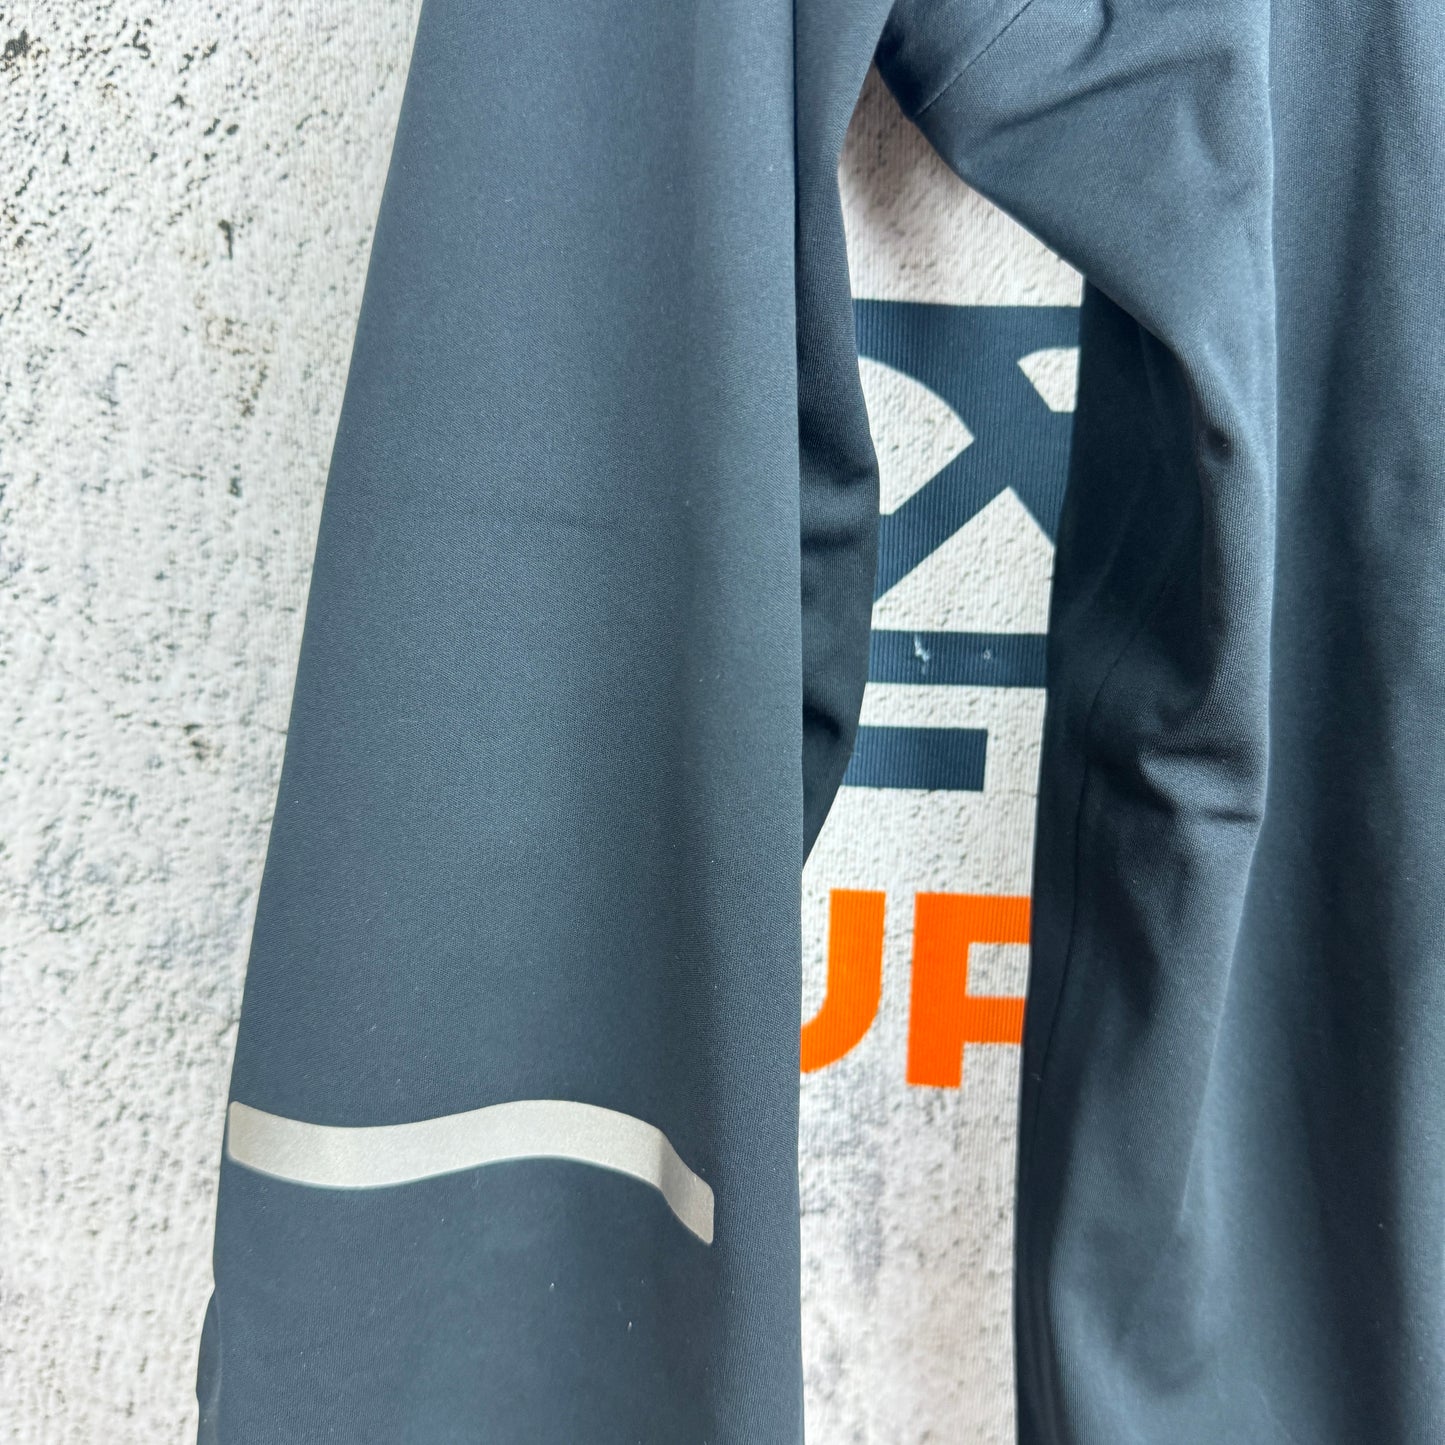 New w/o Tags! Pearl iZumi Men's Pro NeoShell WxB Medium Cycling Jacket $325 MSRP